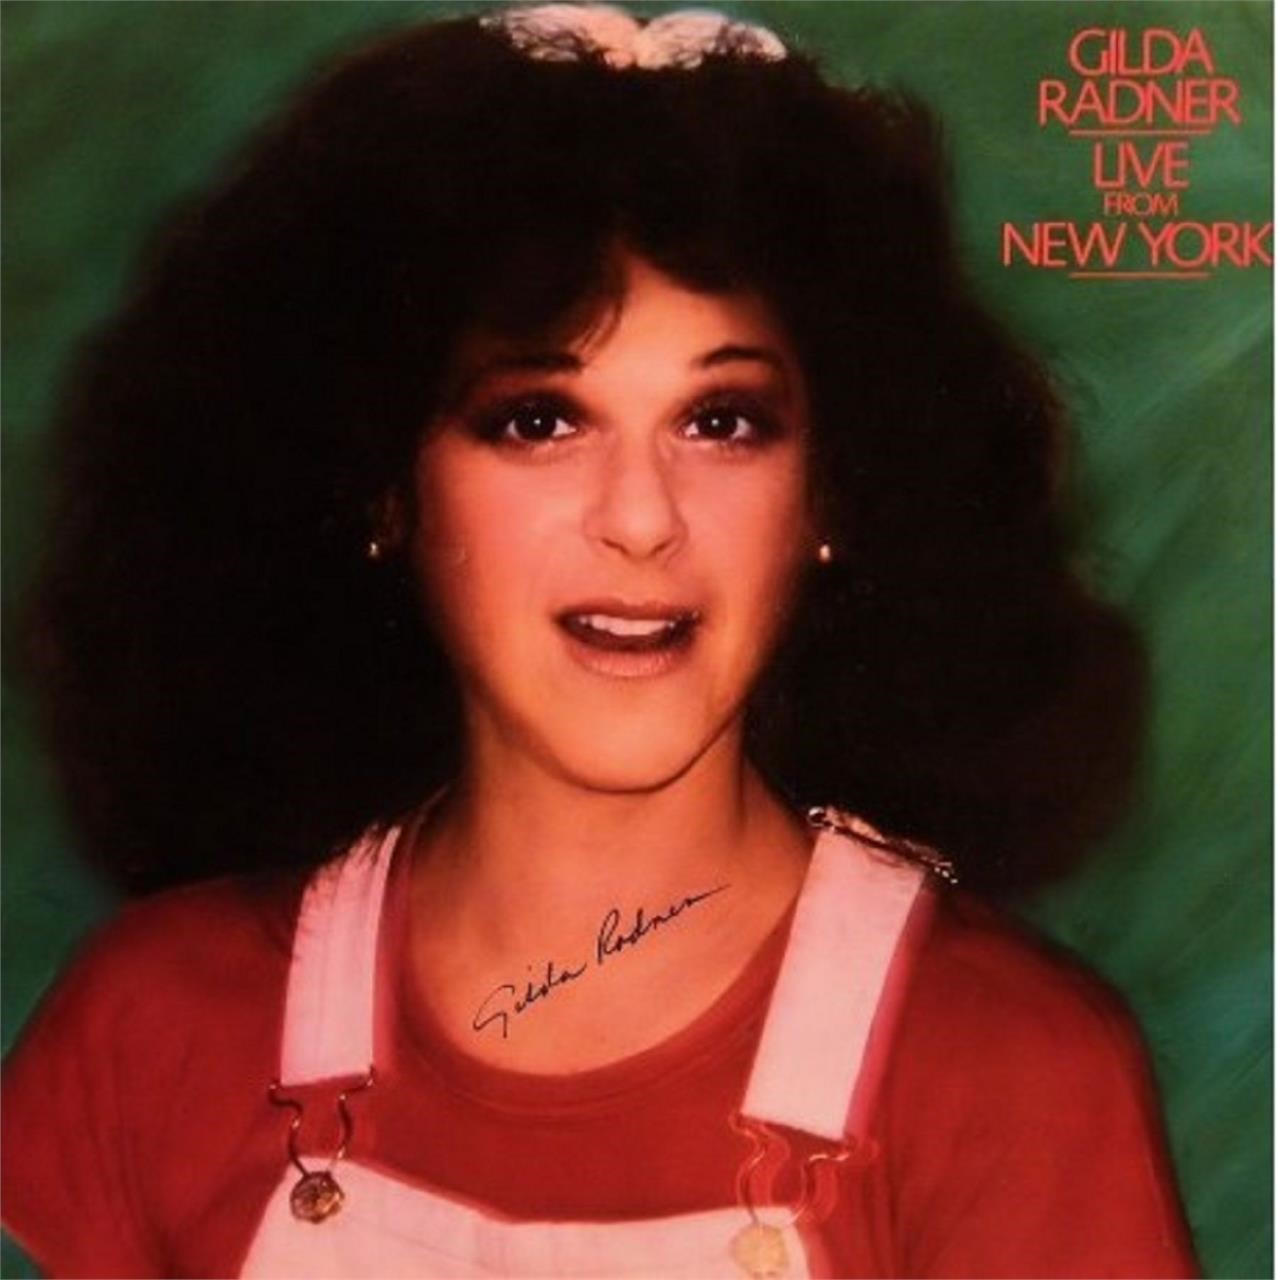 Gilda Radner signed "Live From New York" album